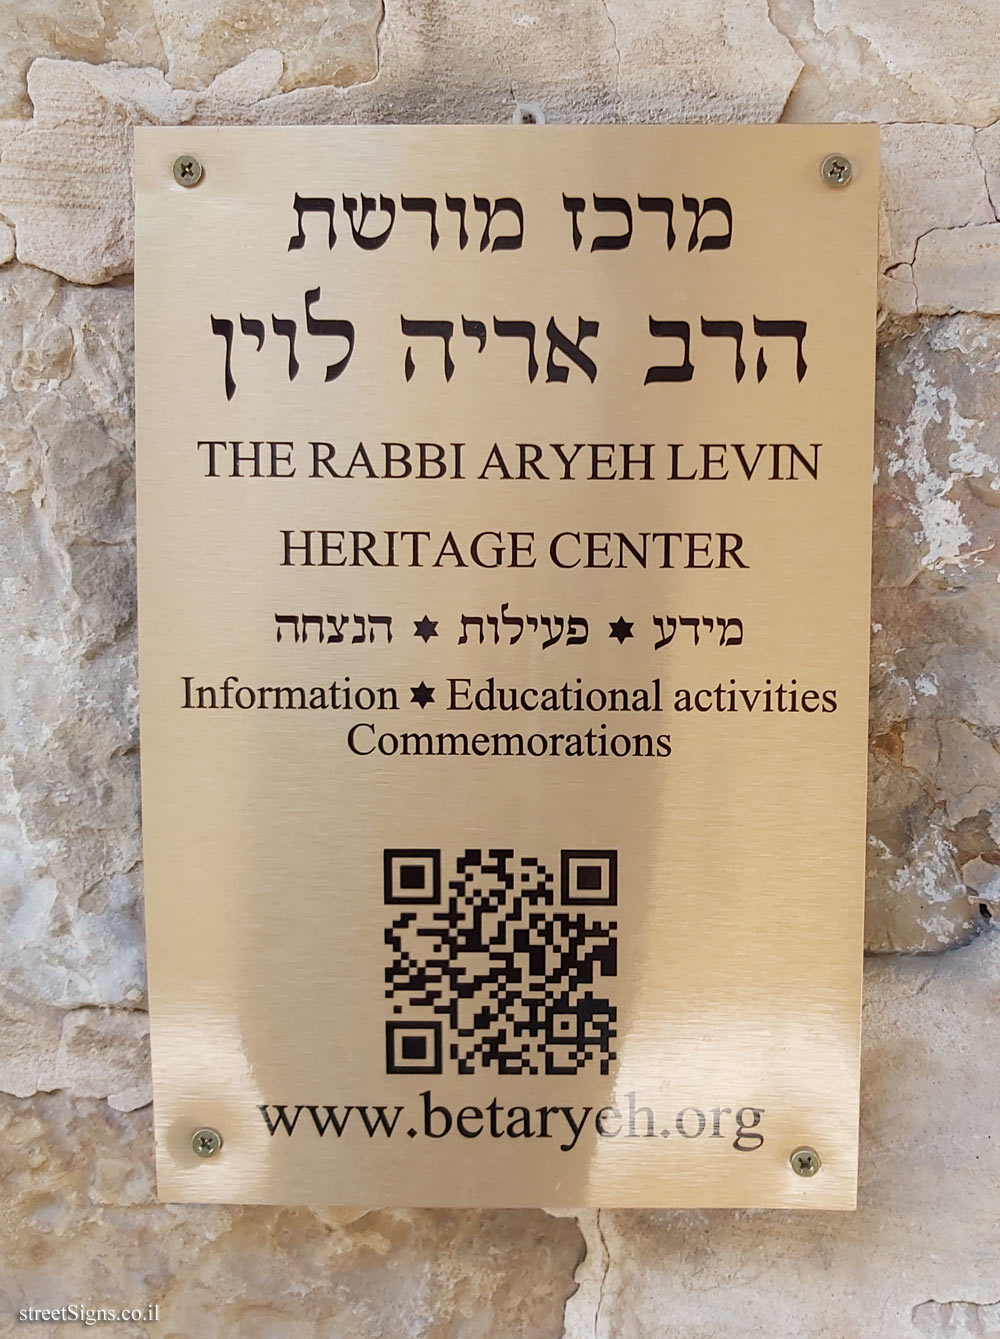 The House of Rabbi Aryeh Levin - Rabbi Arye St 2, Jerusalem, Israel